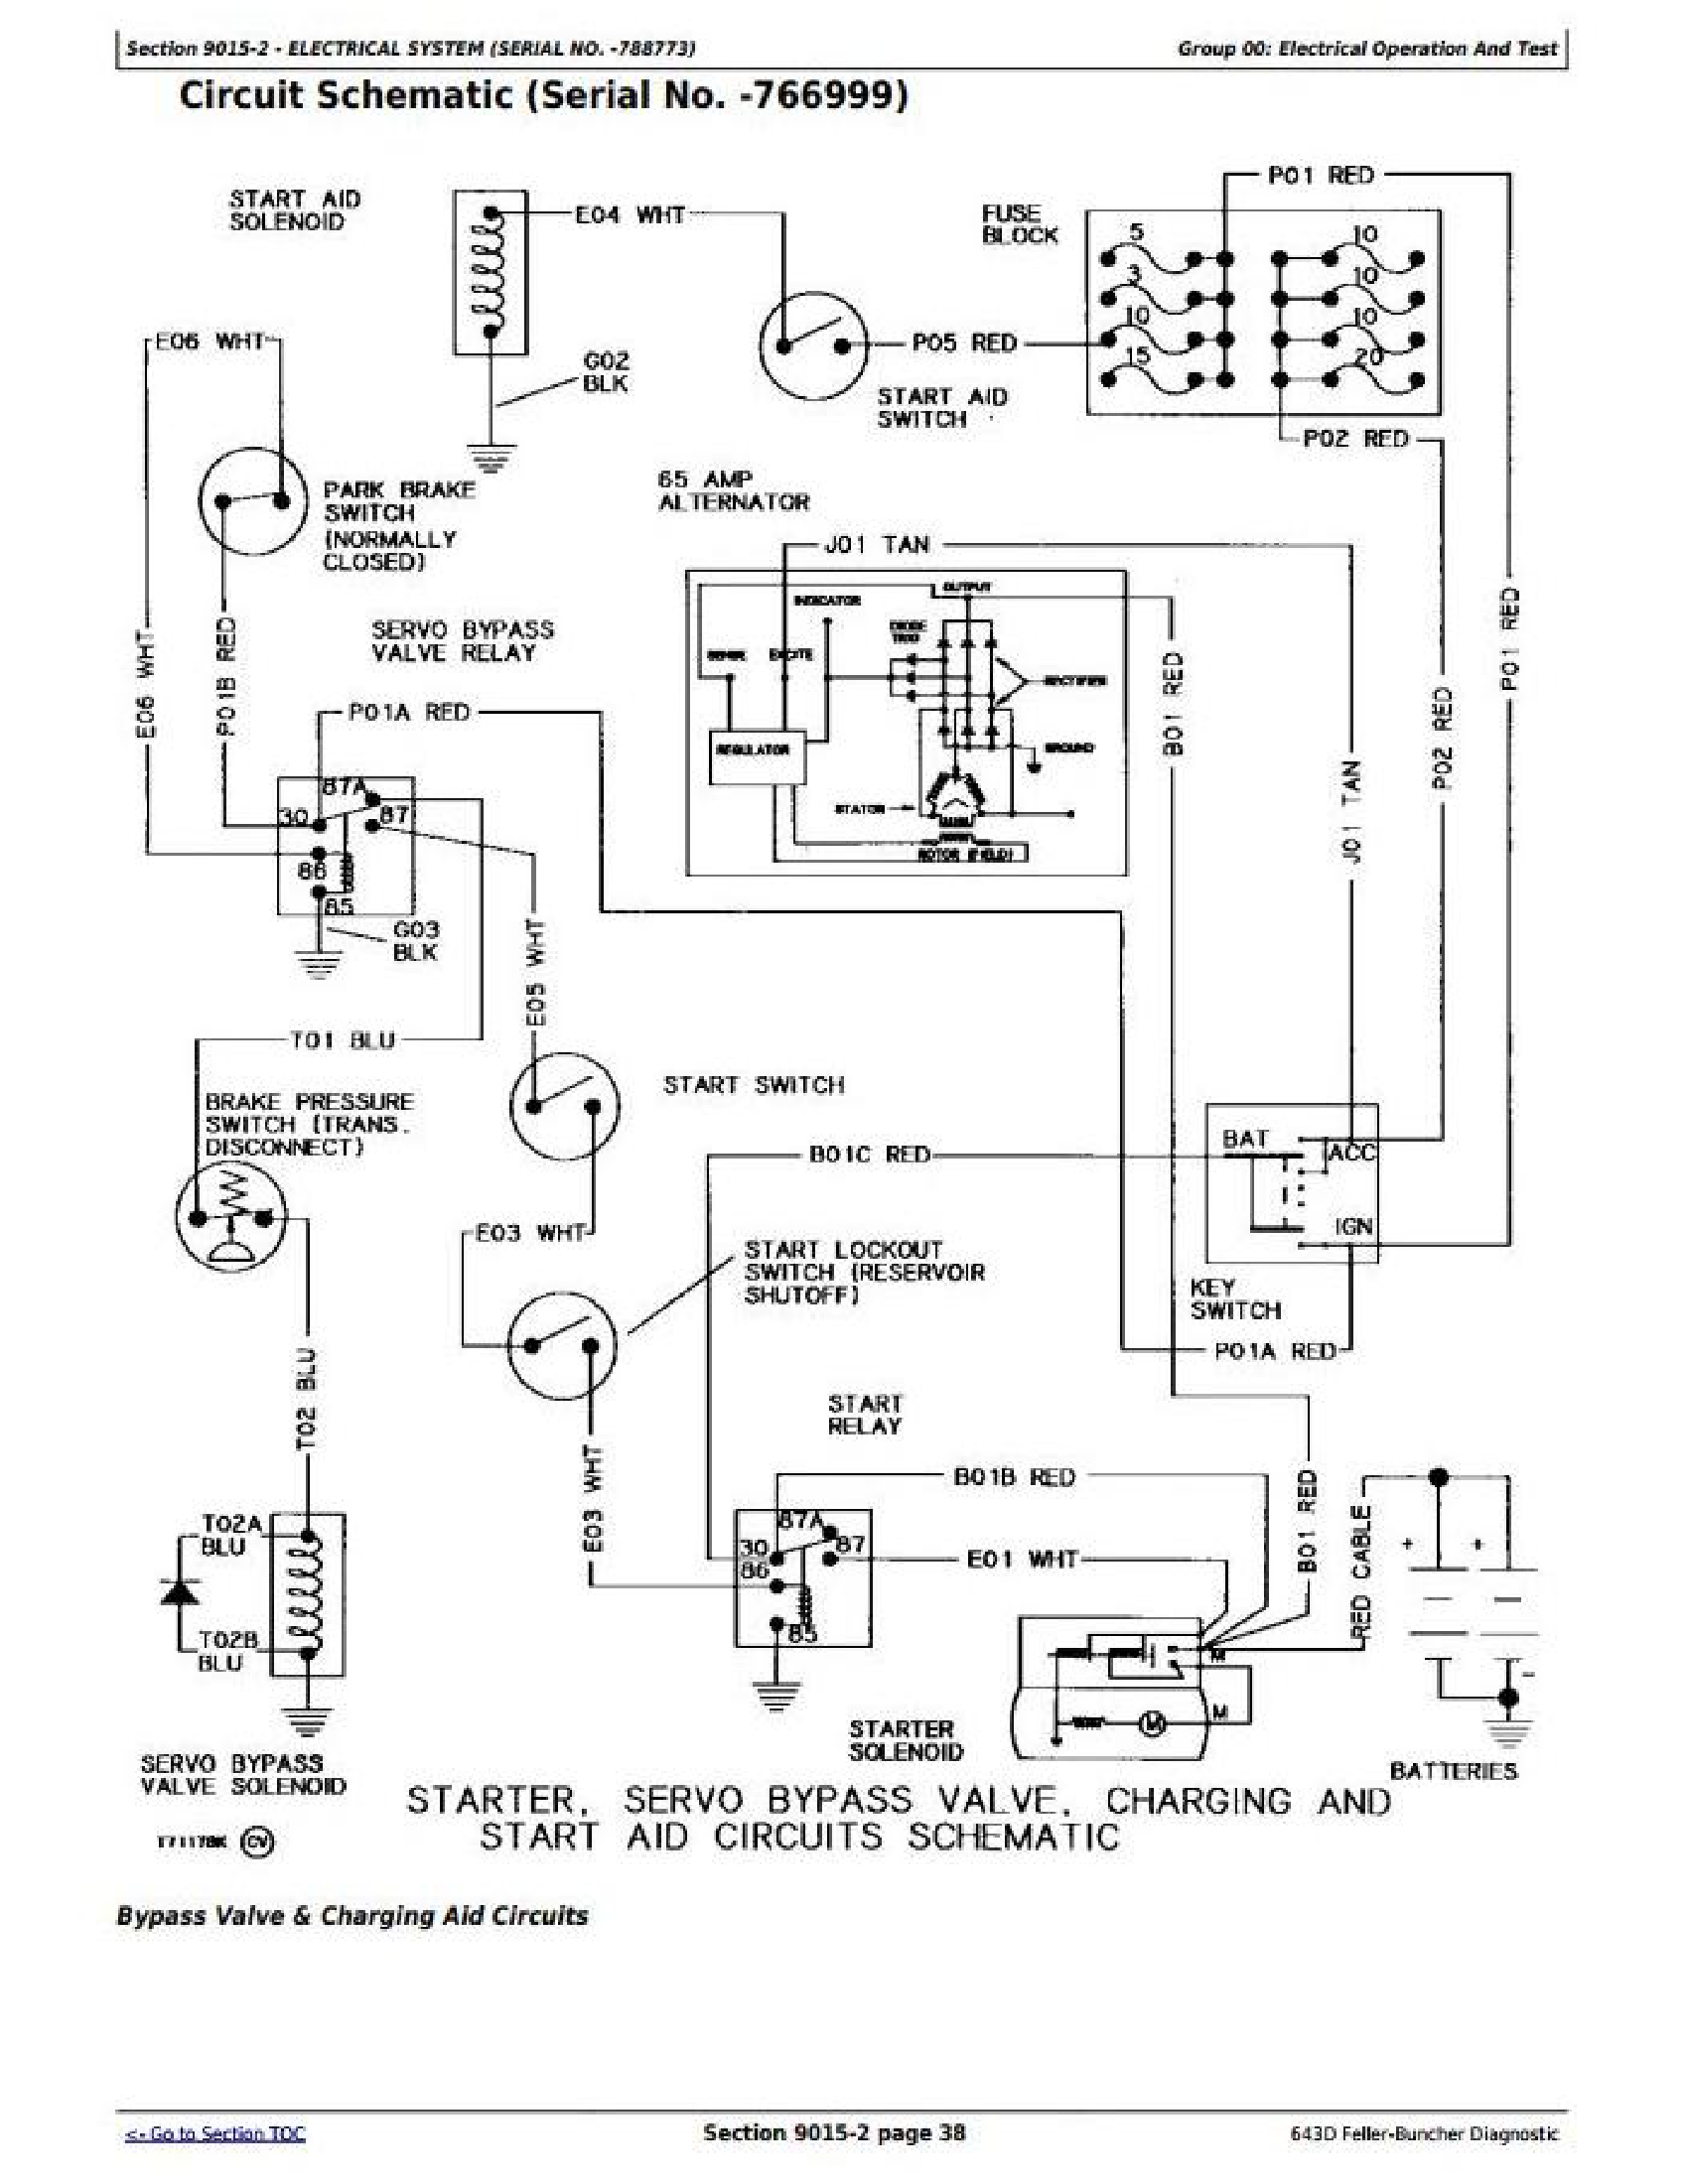 John Deere 643D manual pdf